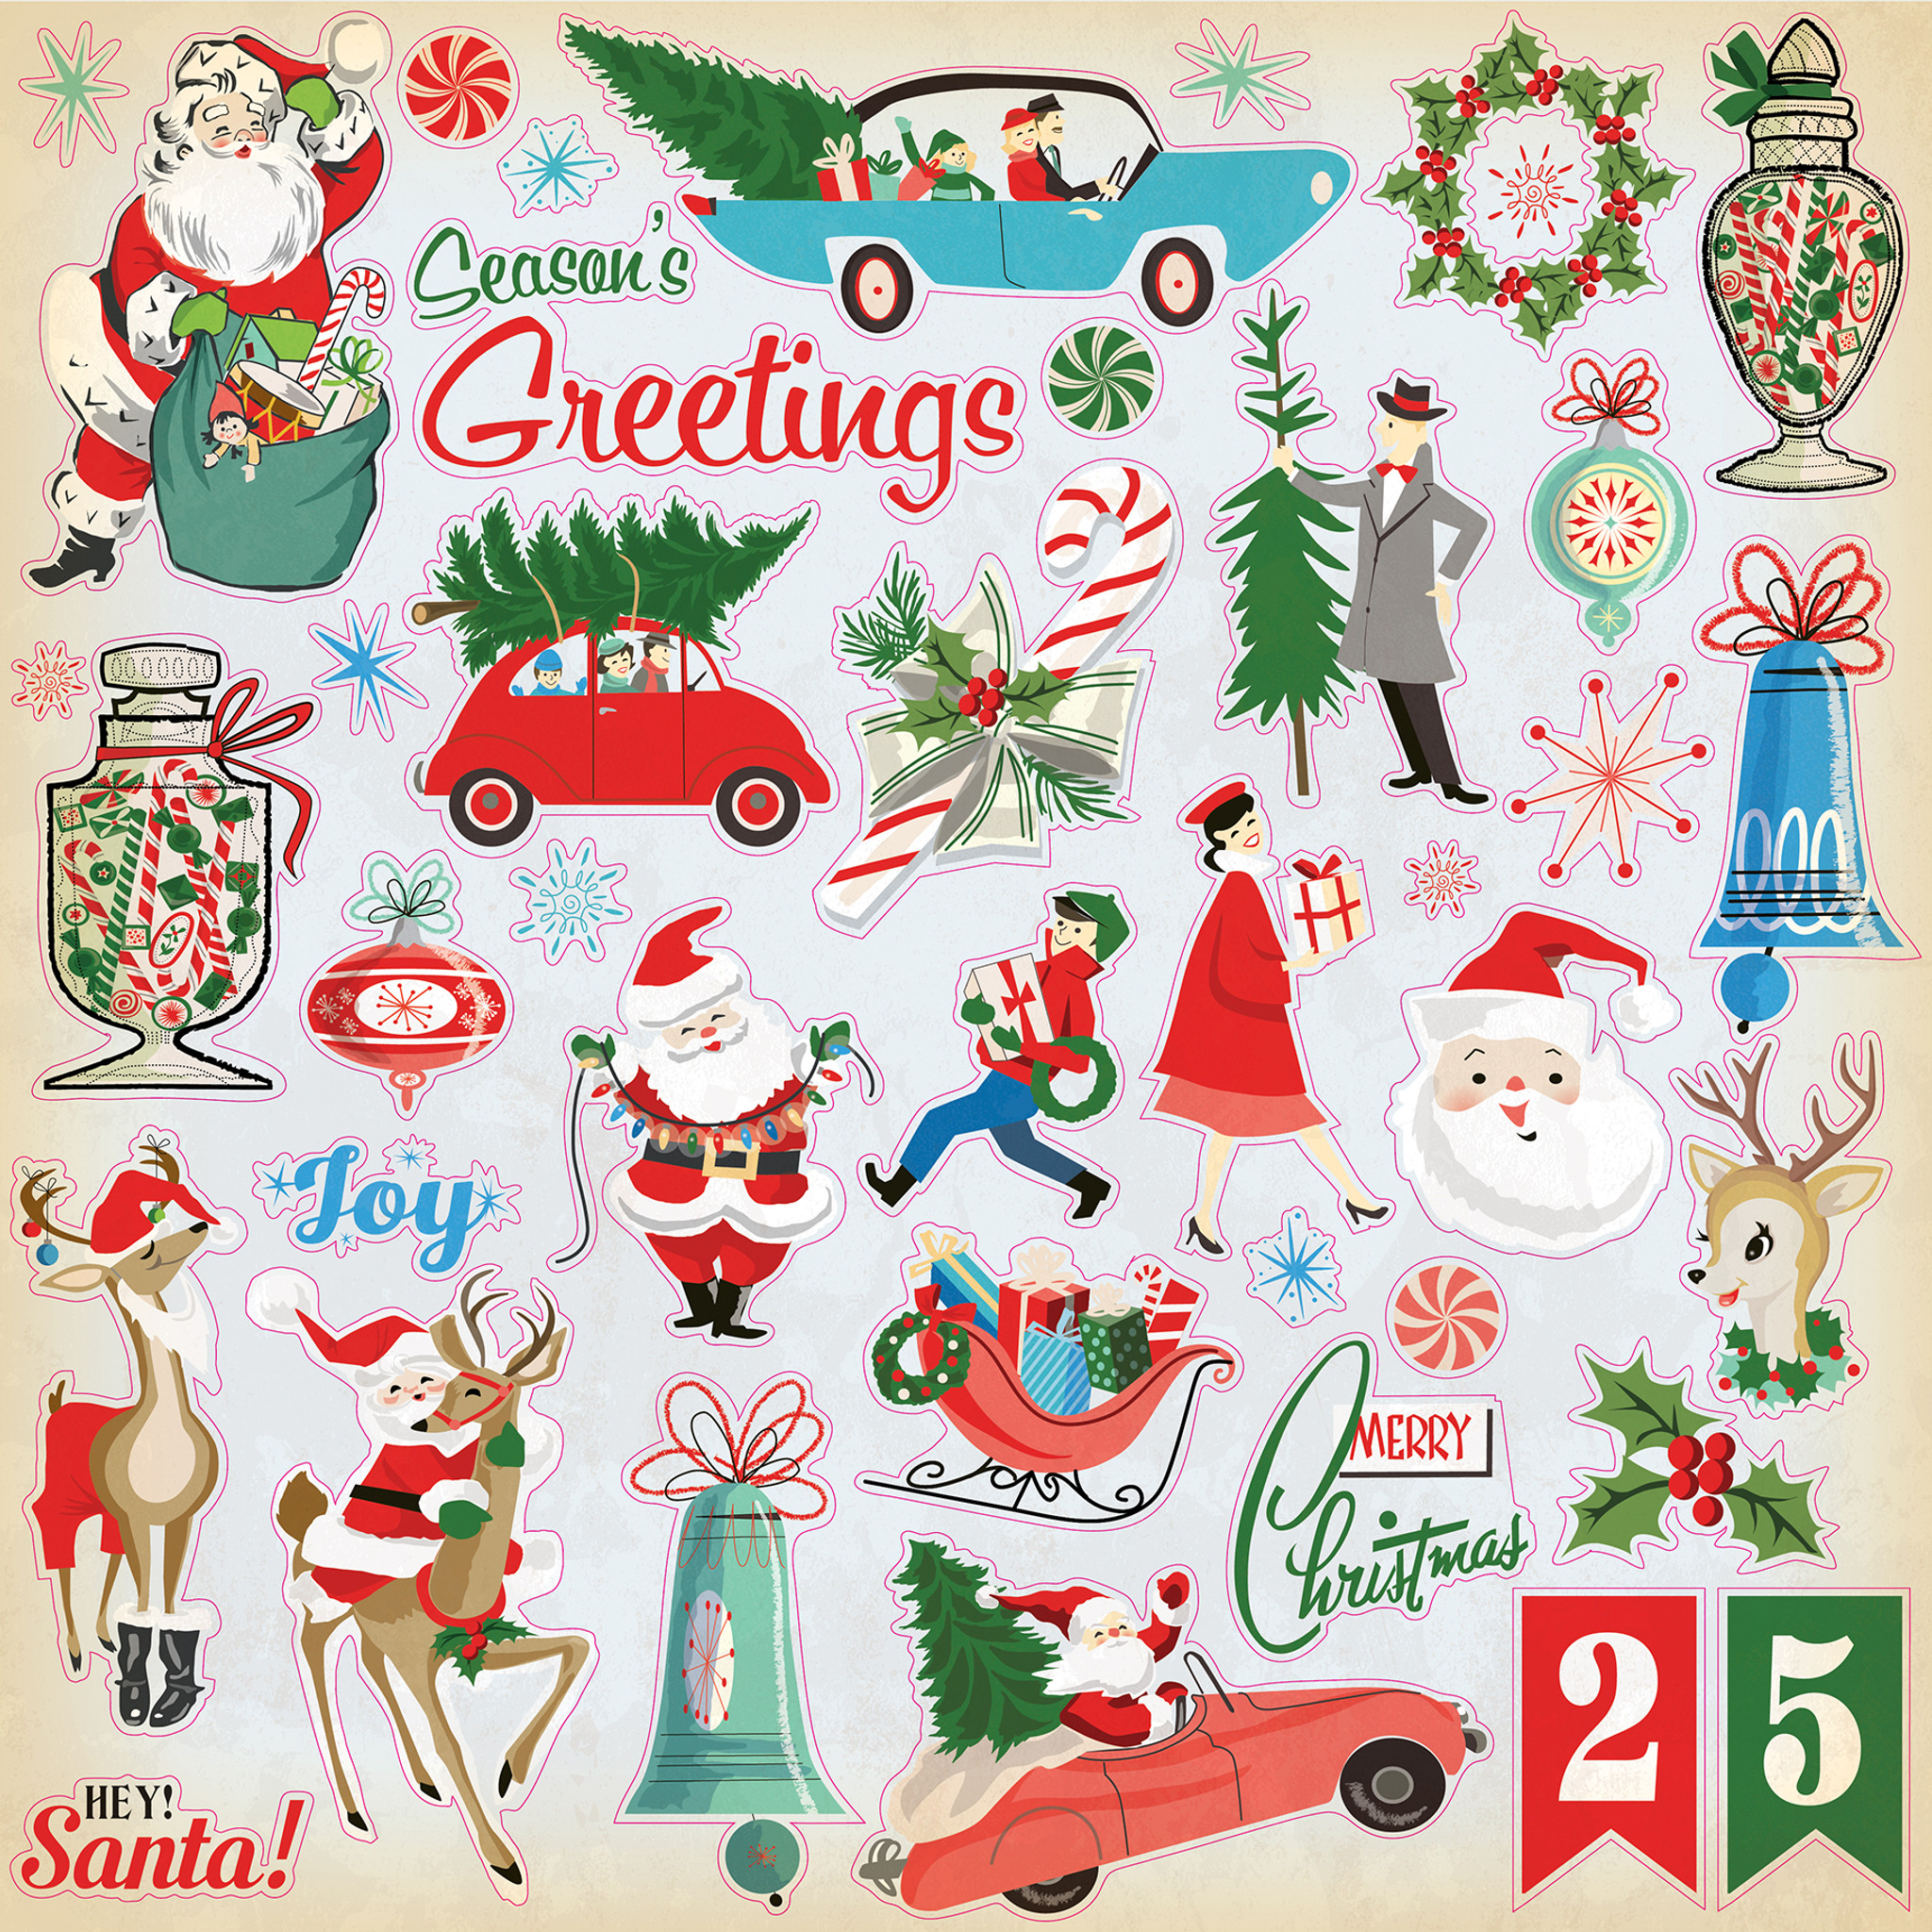 A Very Merry Christmas Sticker Sheet - Echo Park Paper Co.